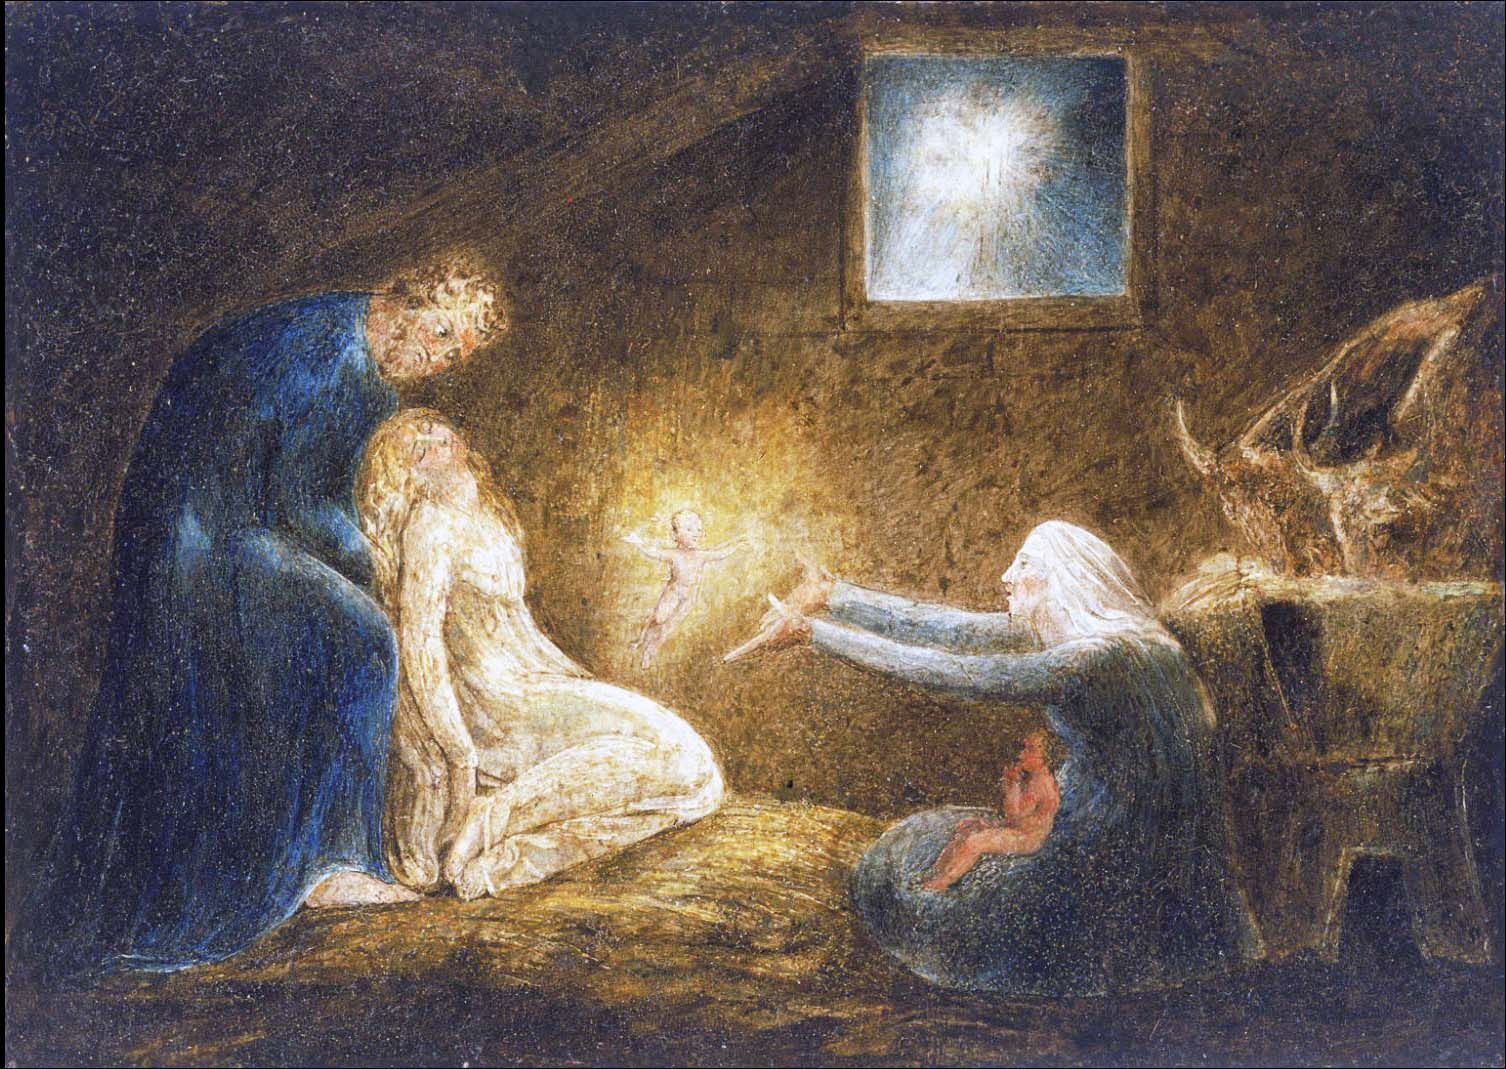 Nativity by William Blake